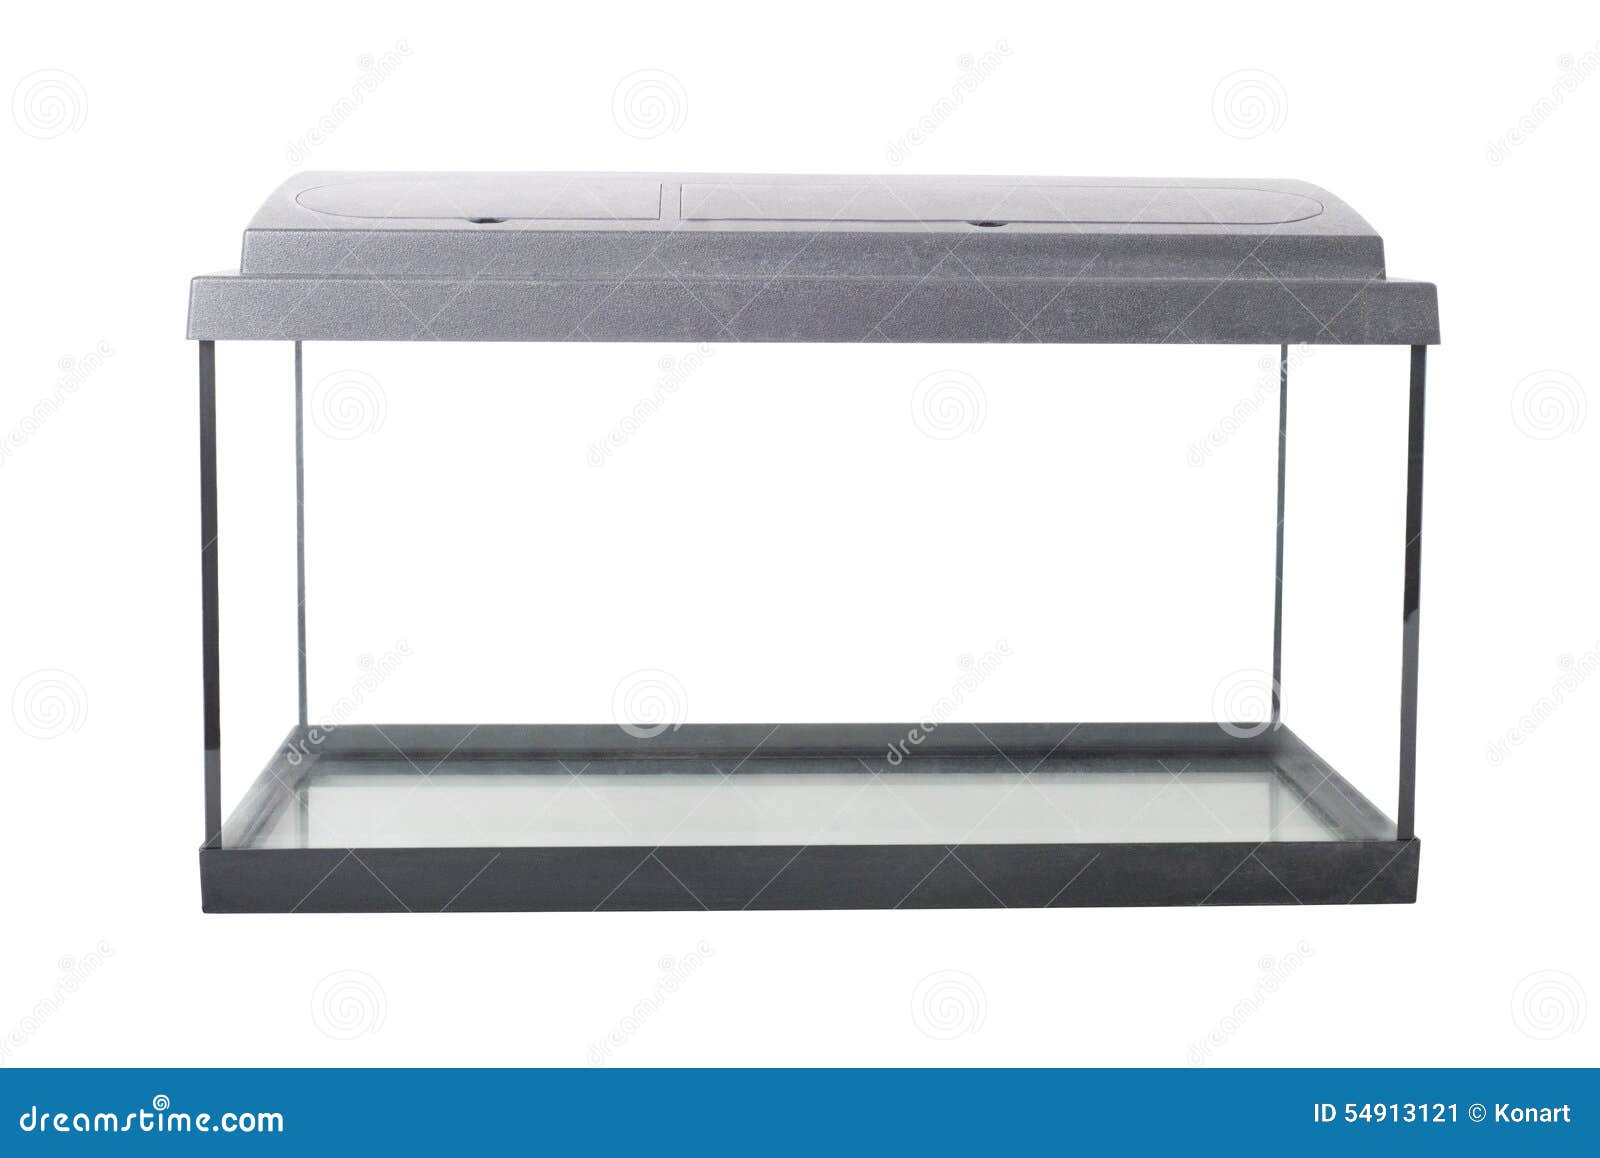 empty squared fish tank